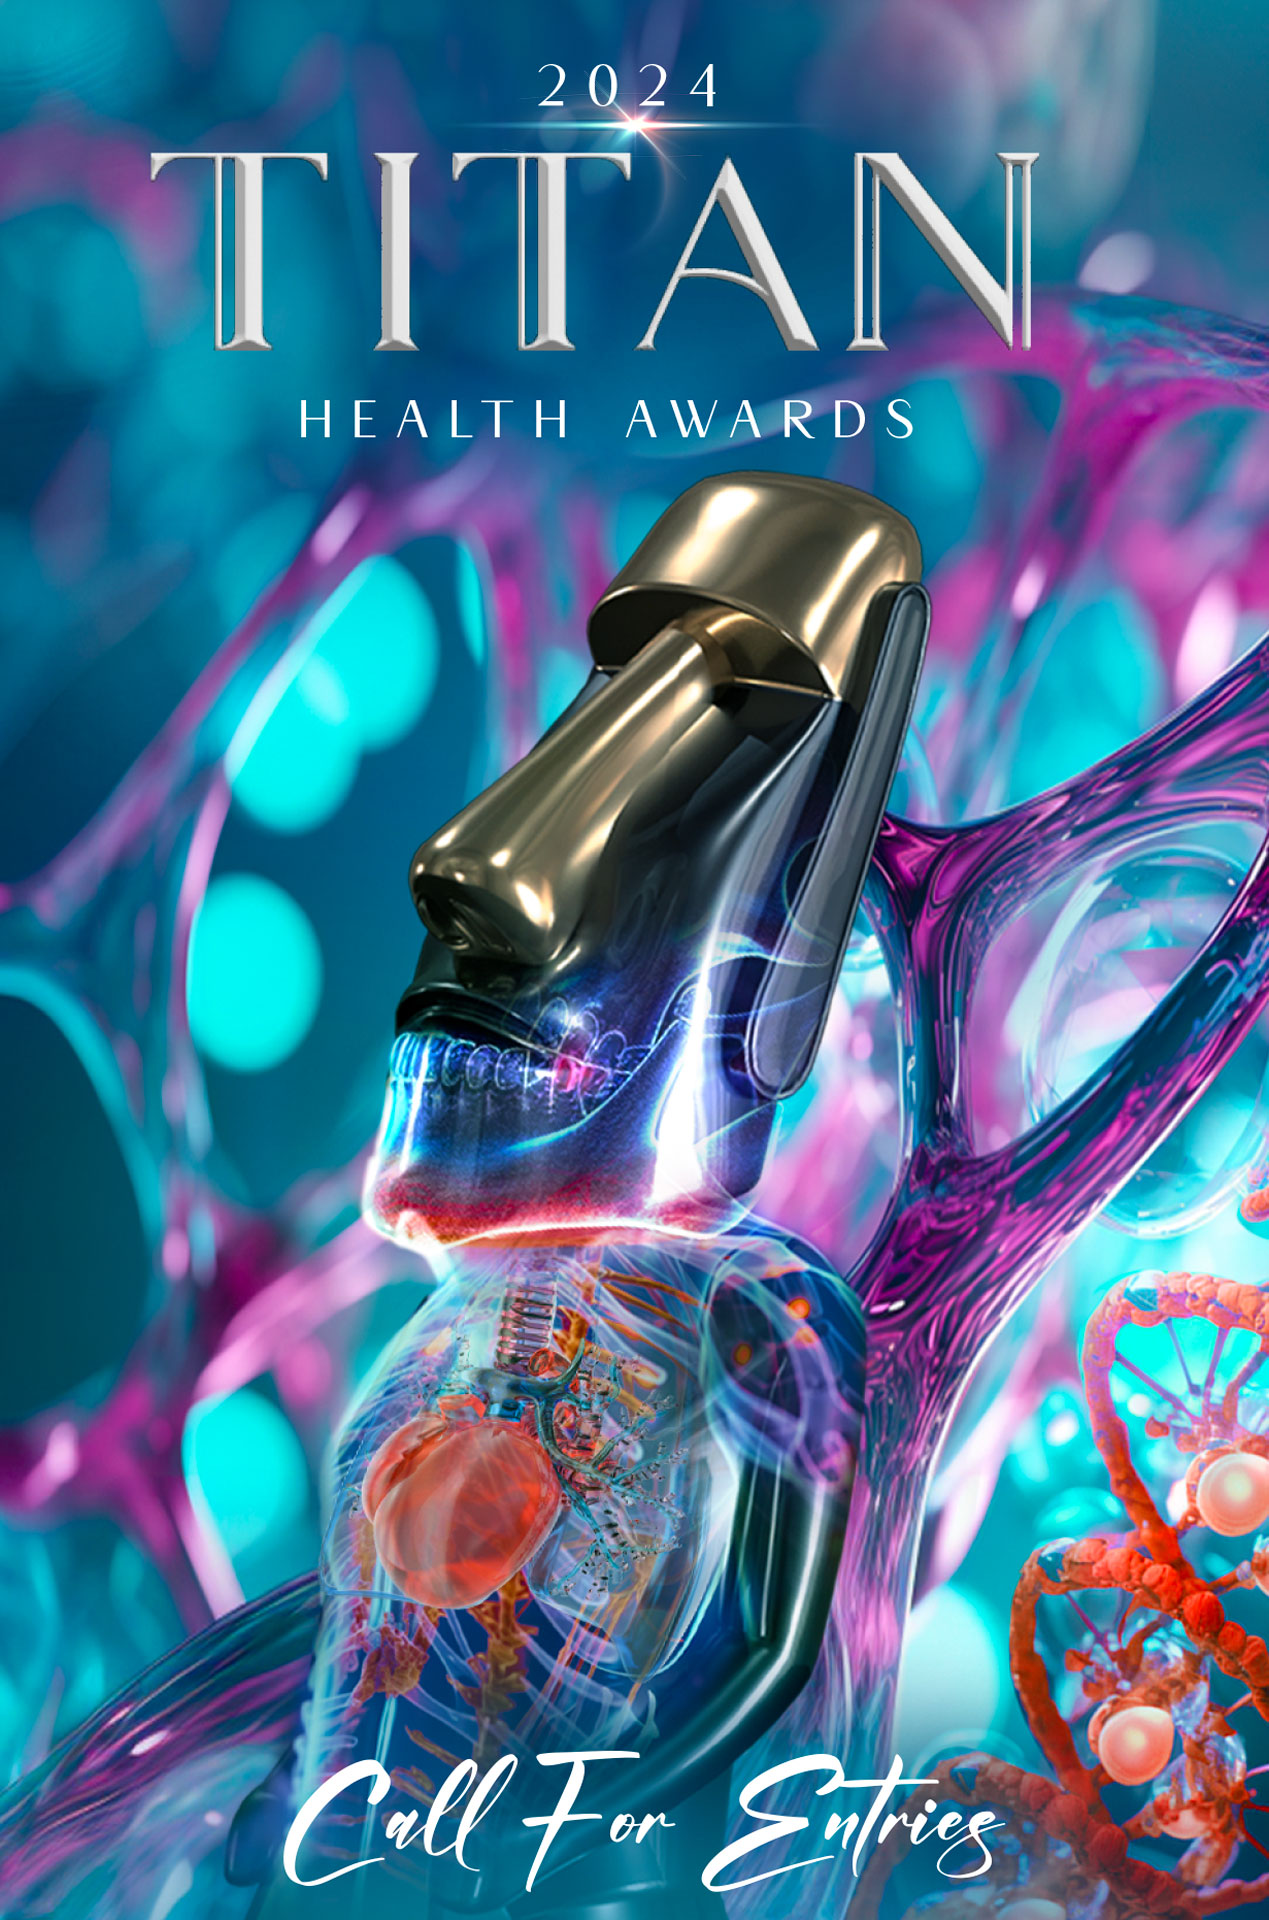 S1 TITAN Health Awards 2024 Call For Entries